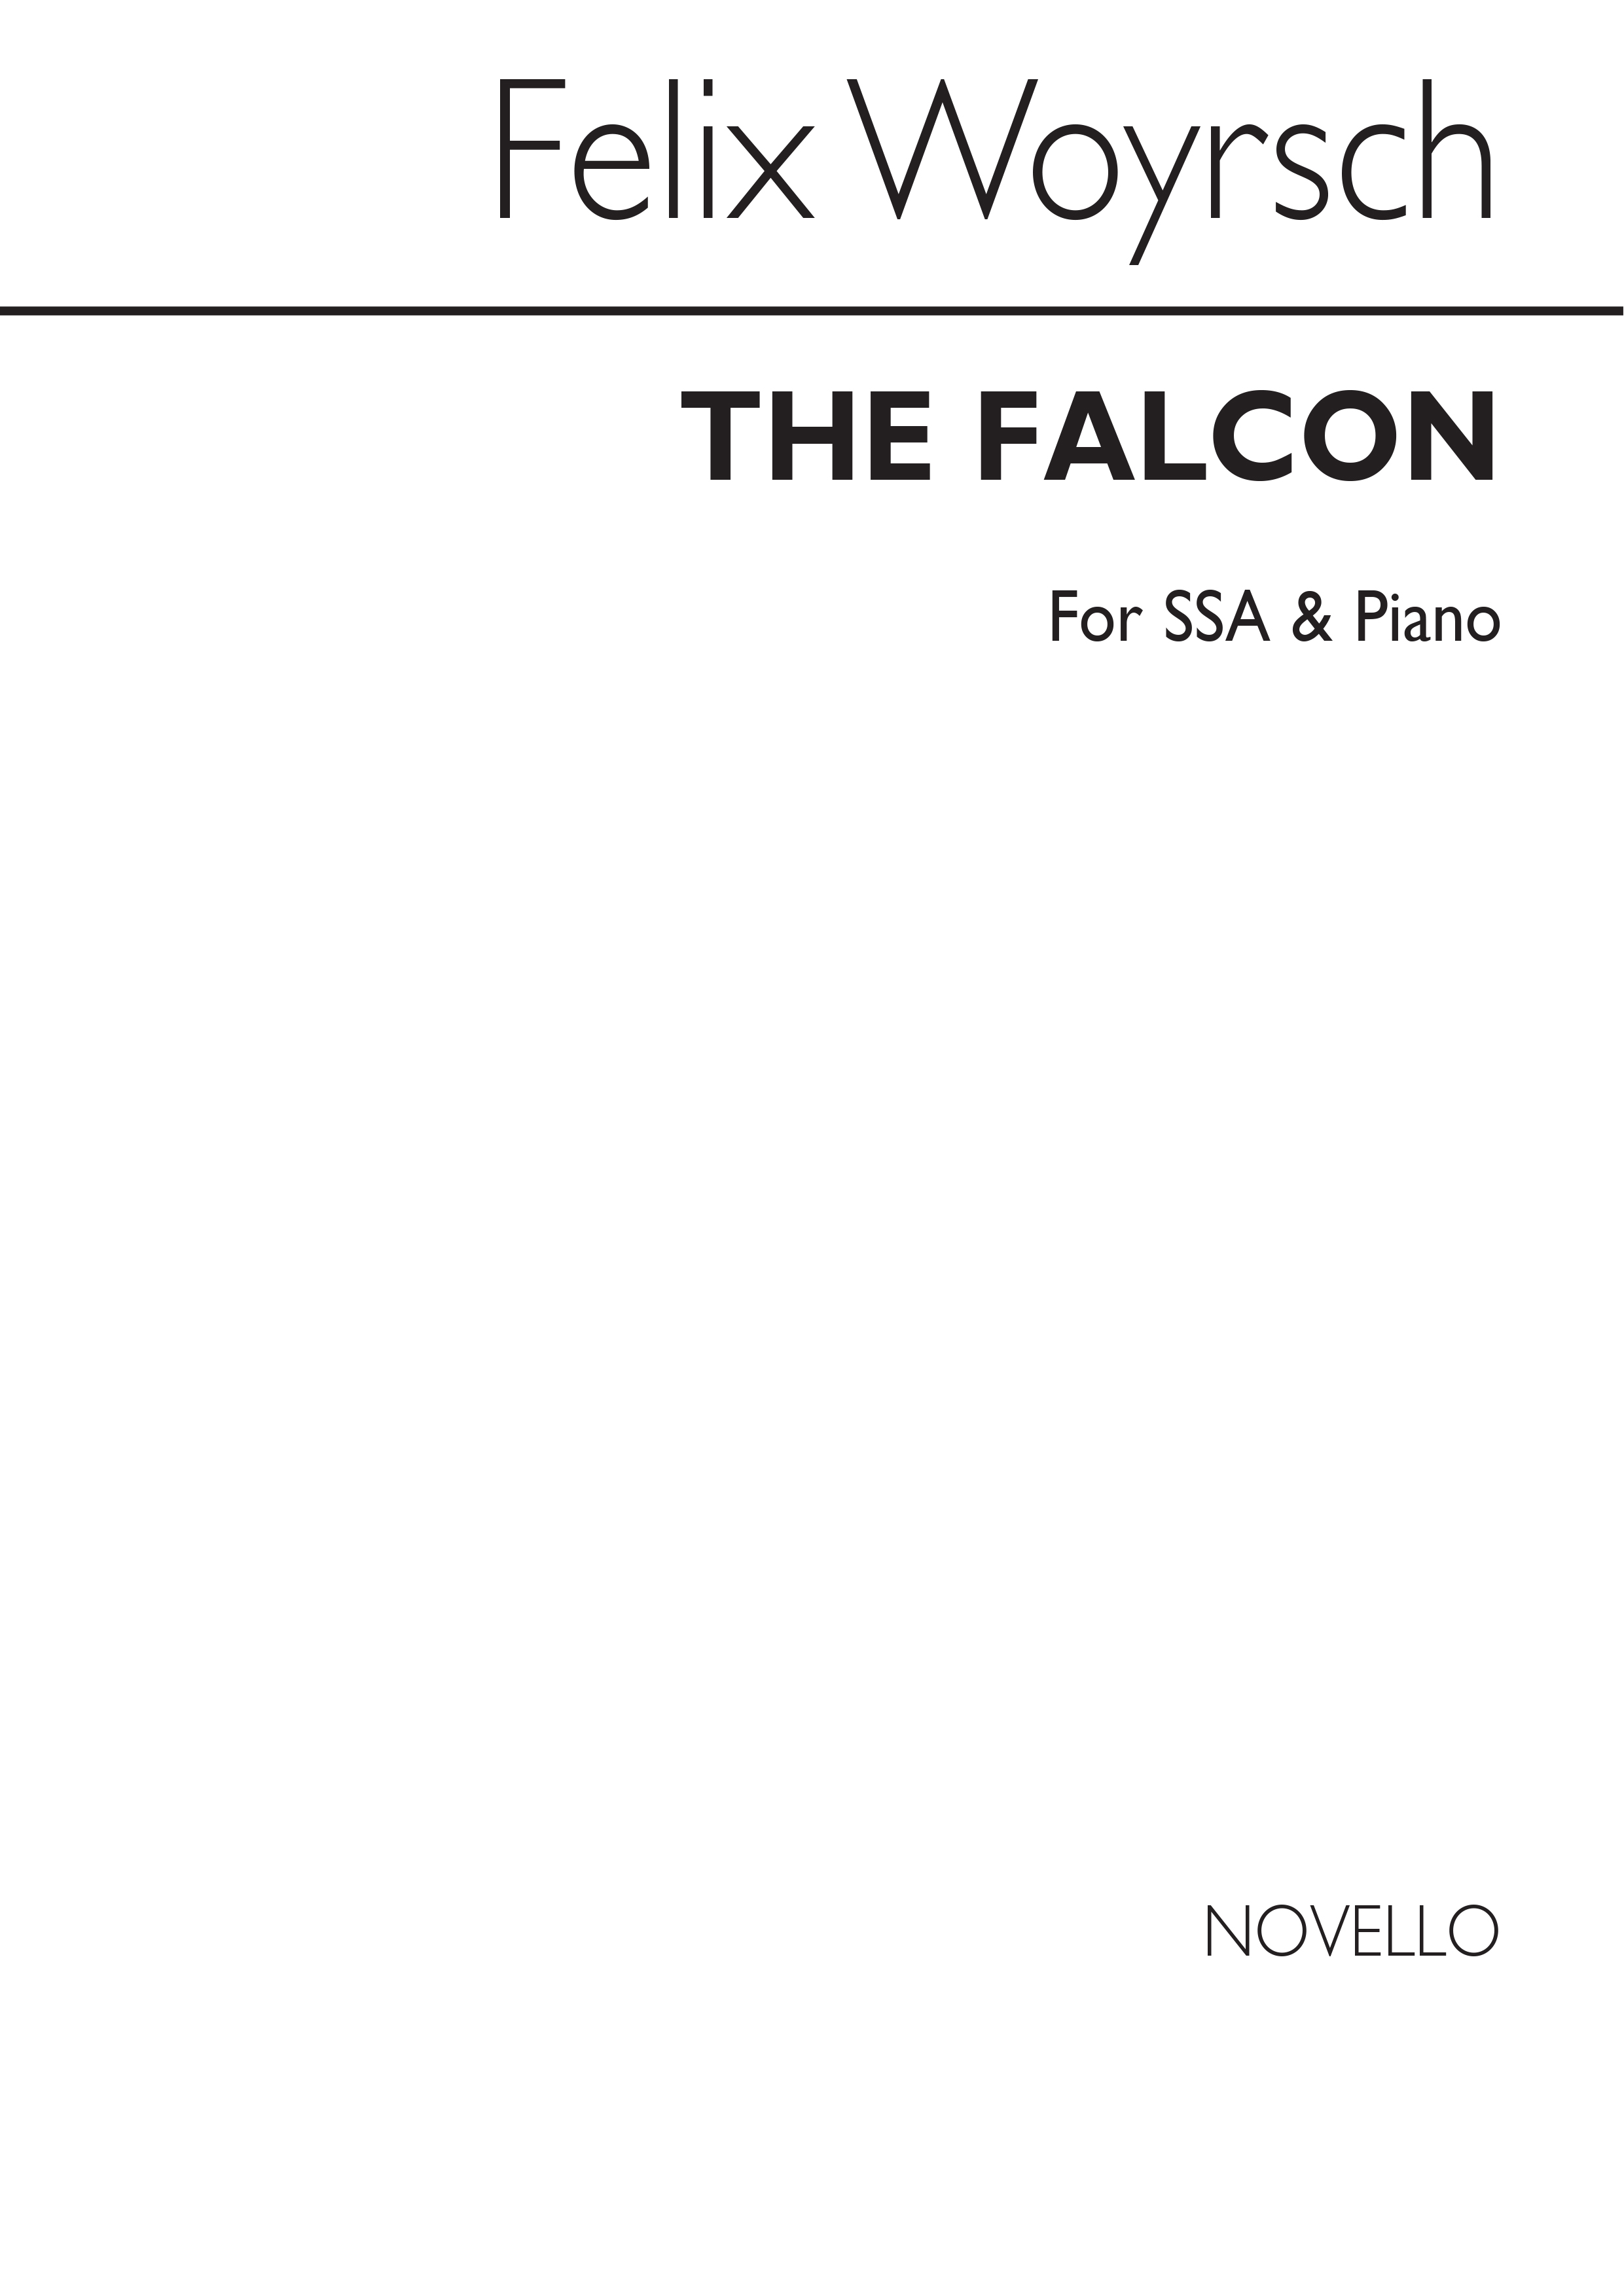 Woyrsch: The Falcon